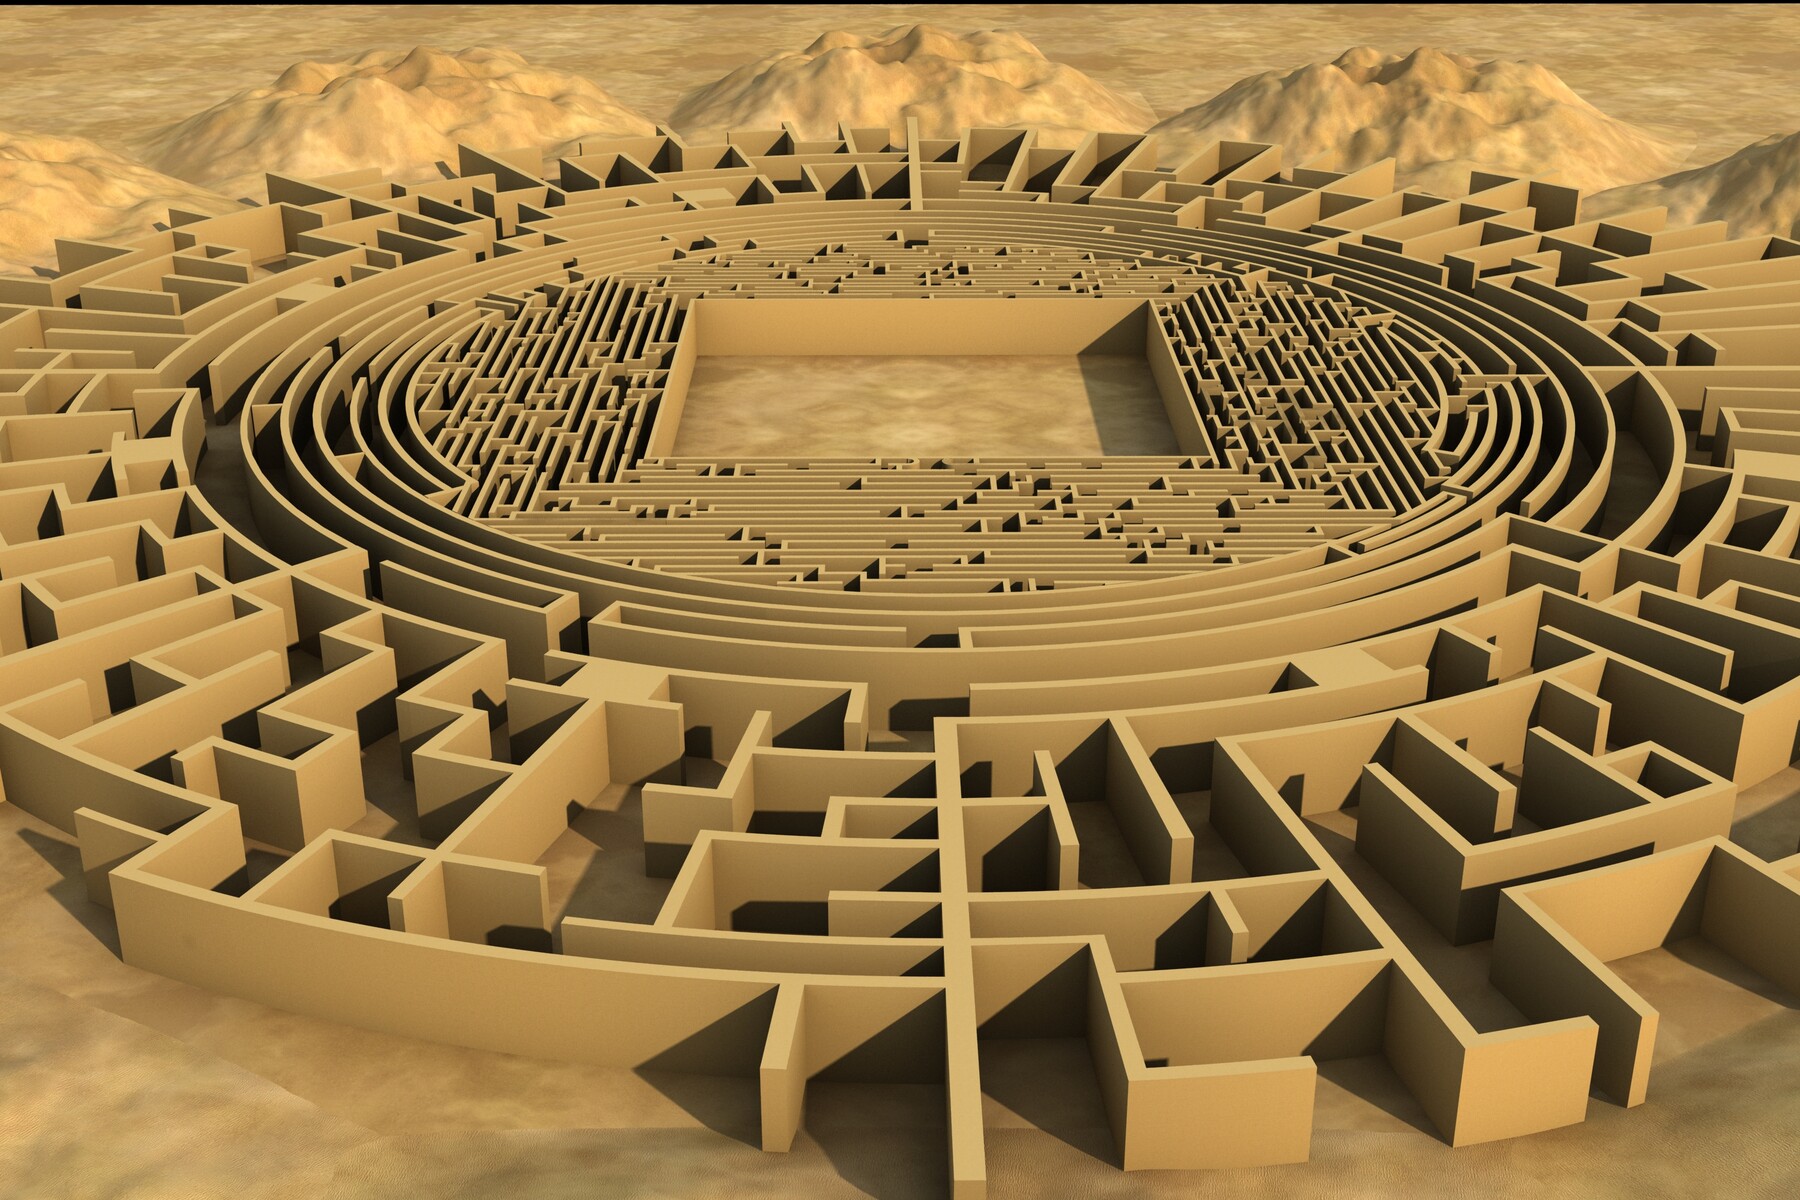 ArtStation - Labyrinth - Maze Runner - 2Ds-3Ds